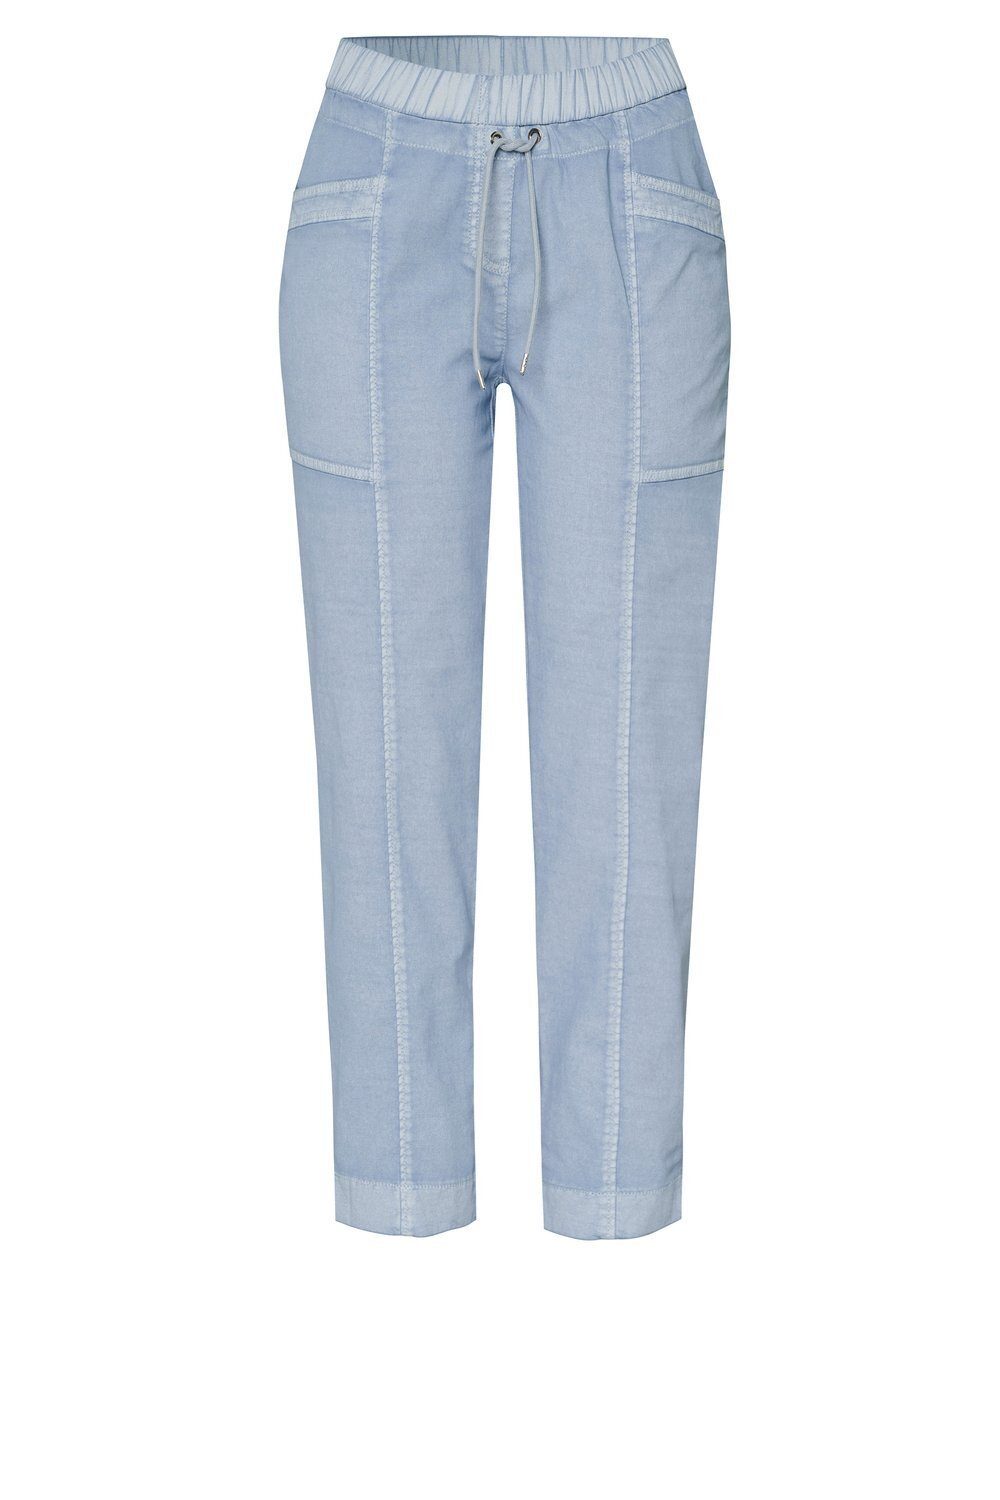 Waschung hellblau TONI mit aufwändiger Pants Sue Jogger - 057